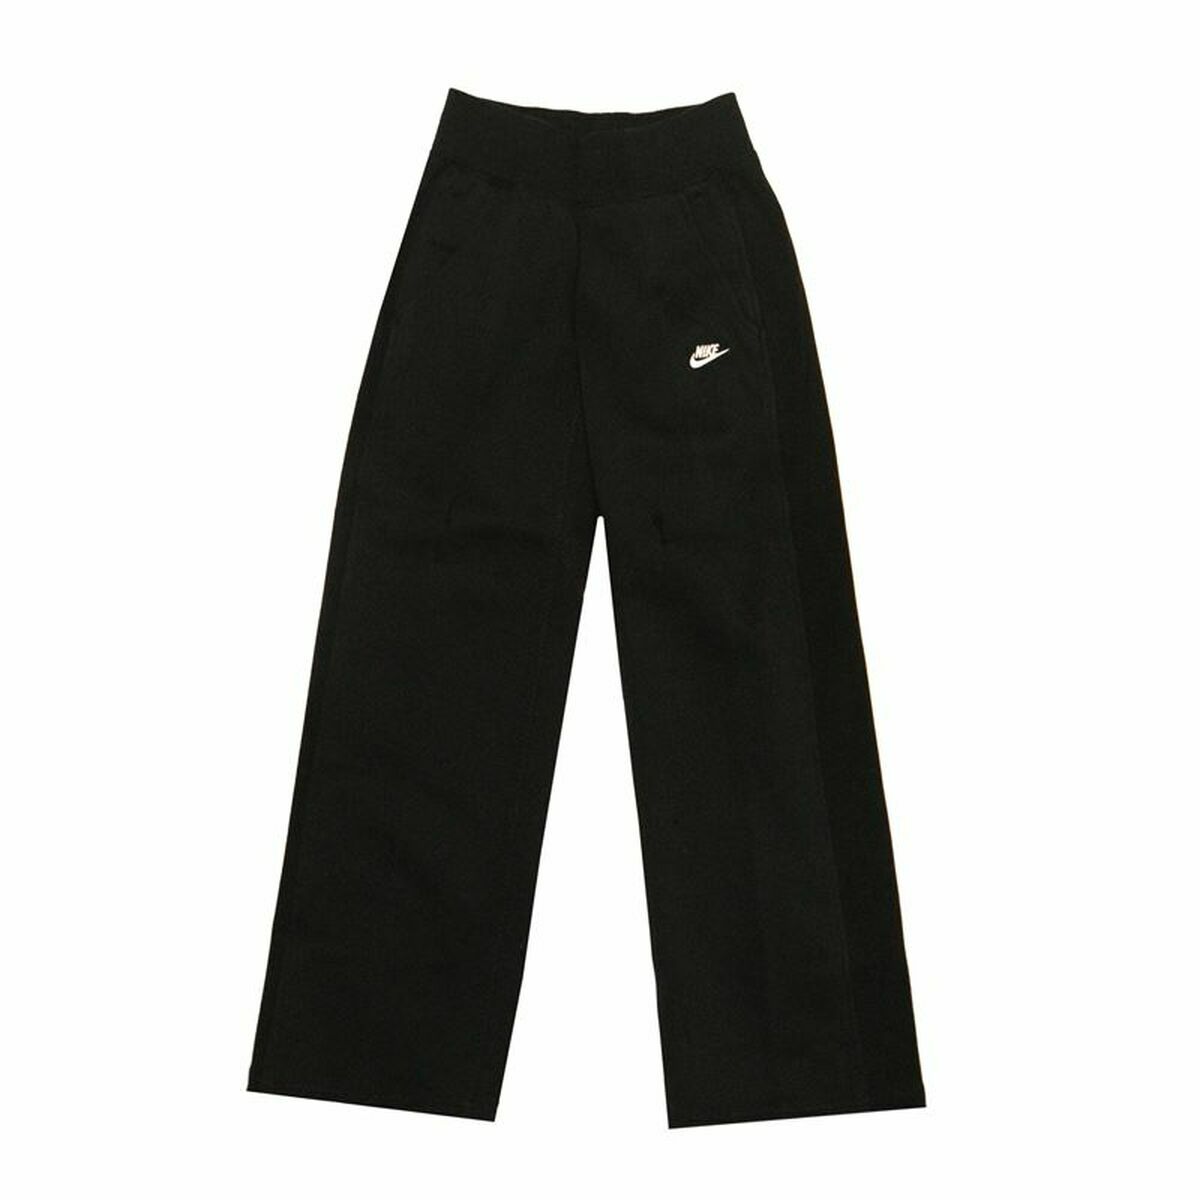 Pantalon de sport long Nike Noir